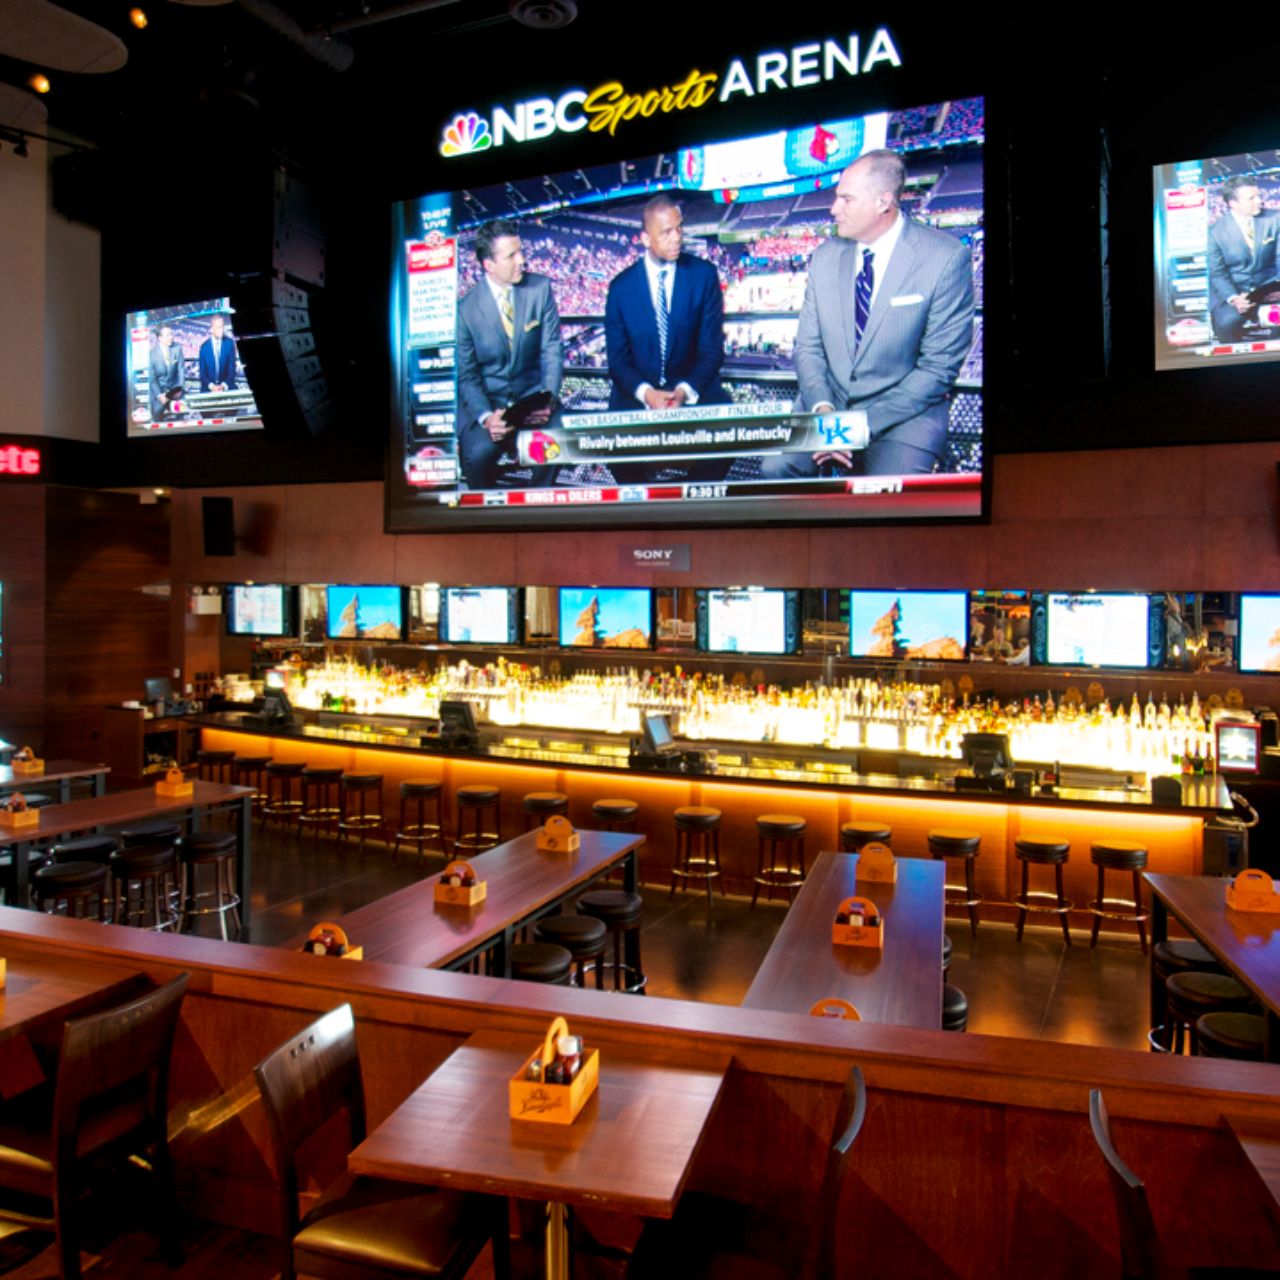 NBC Sports Arena - Xfinity Live! Restaurant